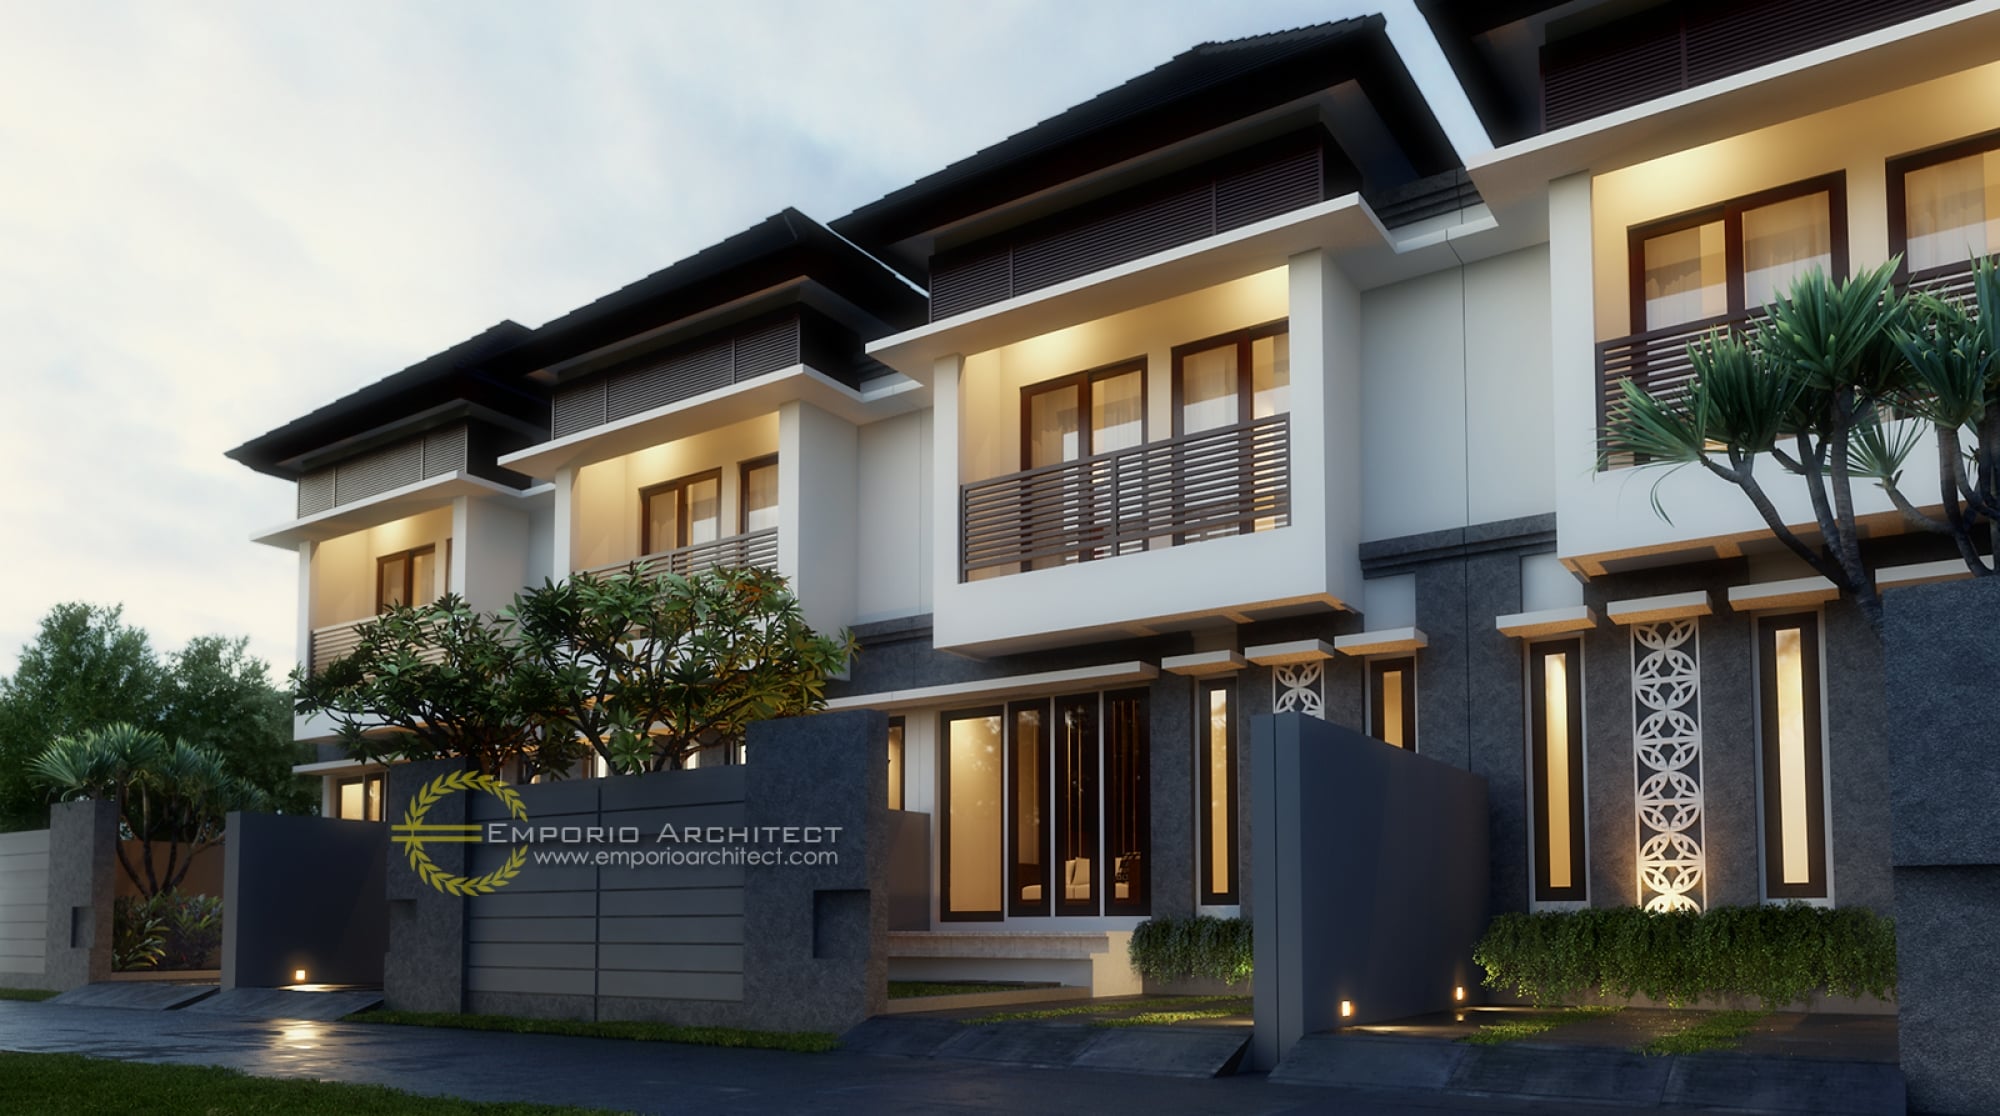 89 Ide Desain Pagar Rumah Bali Modern Yang Wajib Kamu Ketahui